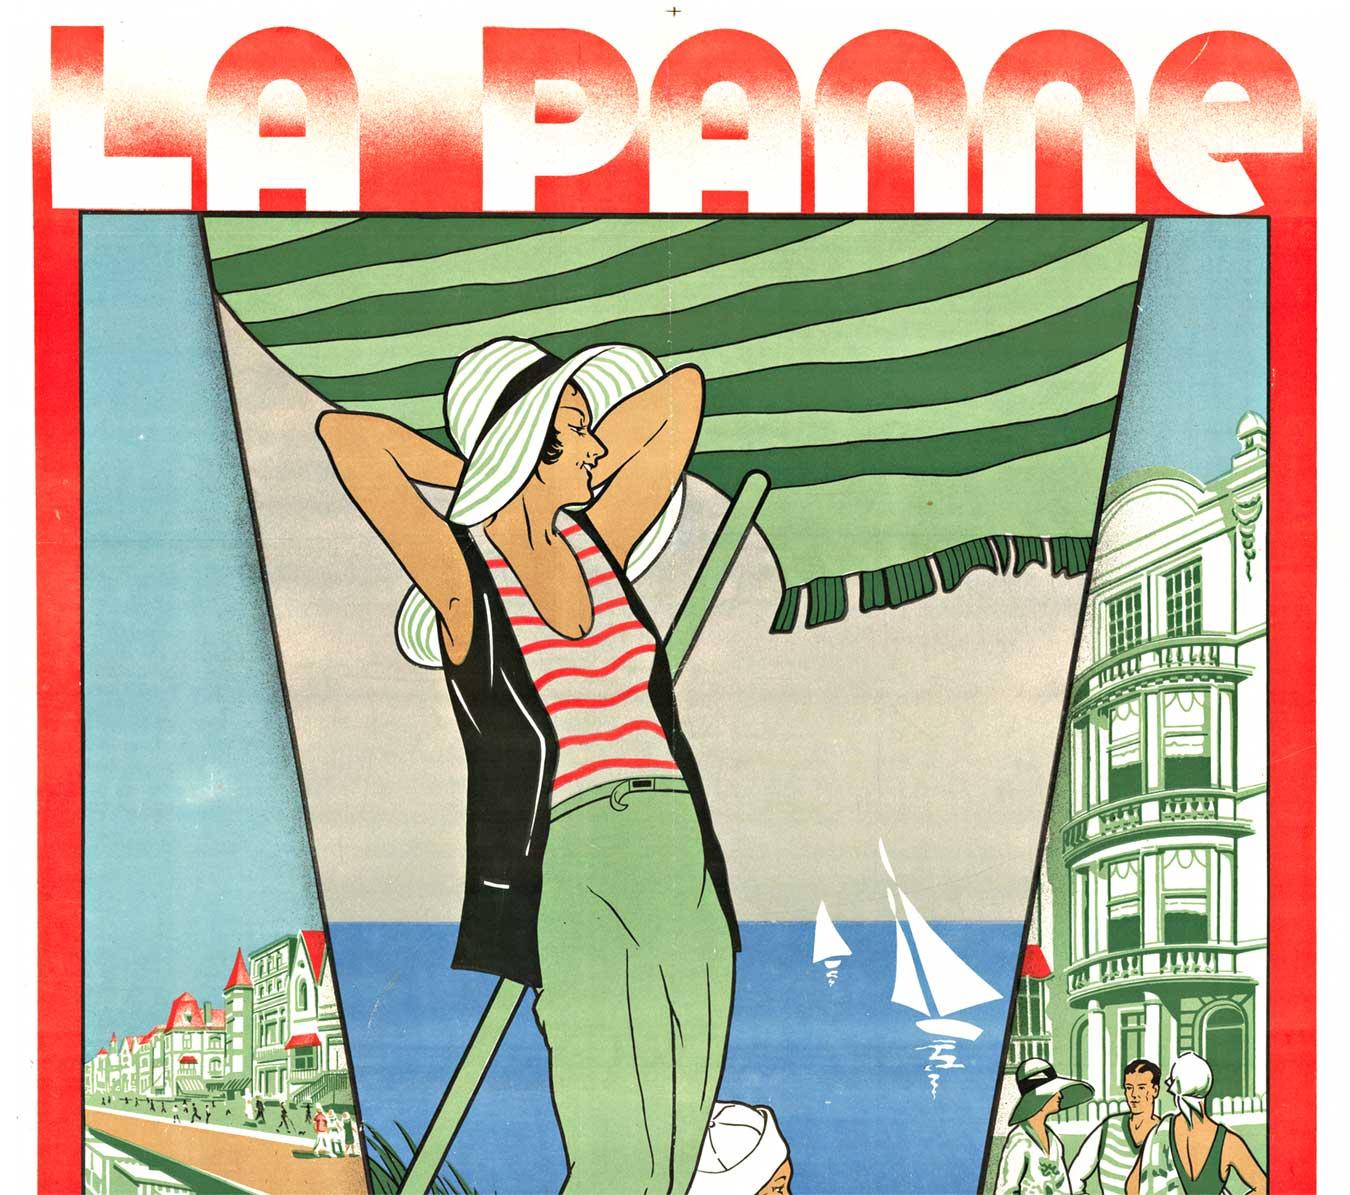 Art Deco original 'La Panna' vintage beach resort poster  1932 - Print by Constant Nortier